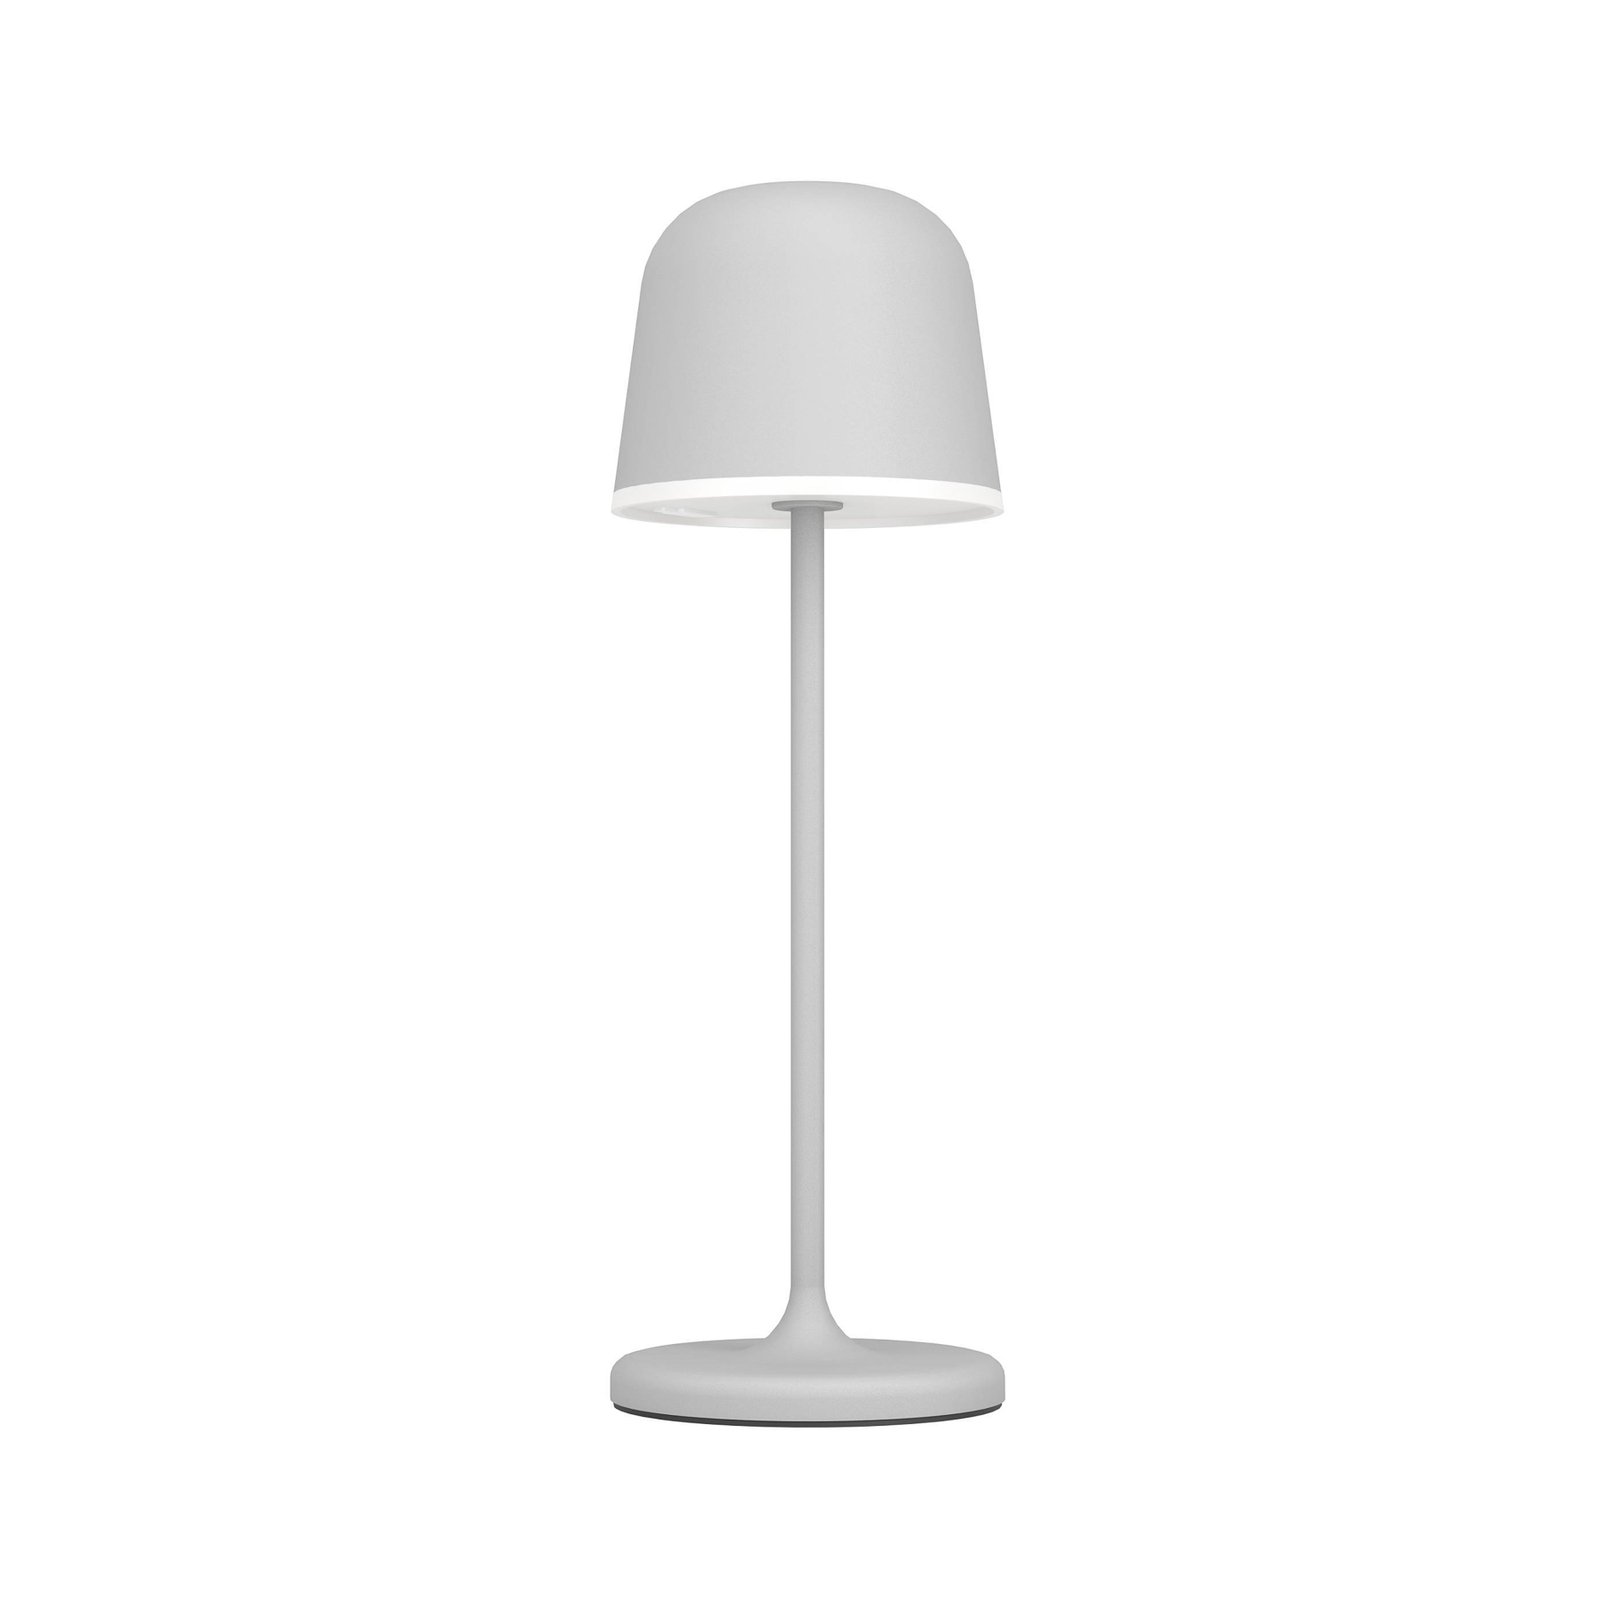 LED tafellamp Mannera met accu, grijs